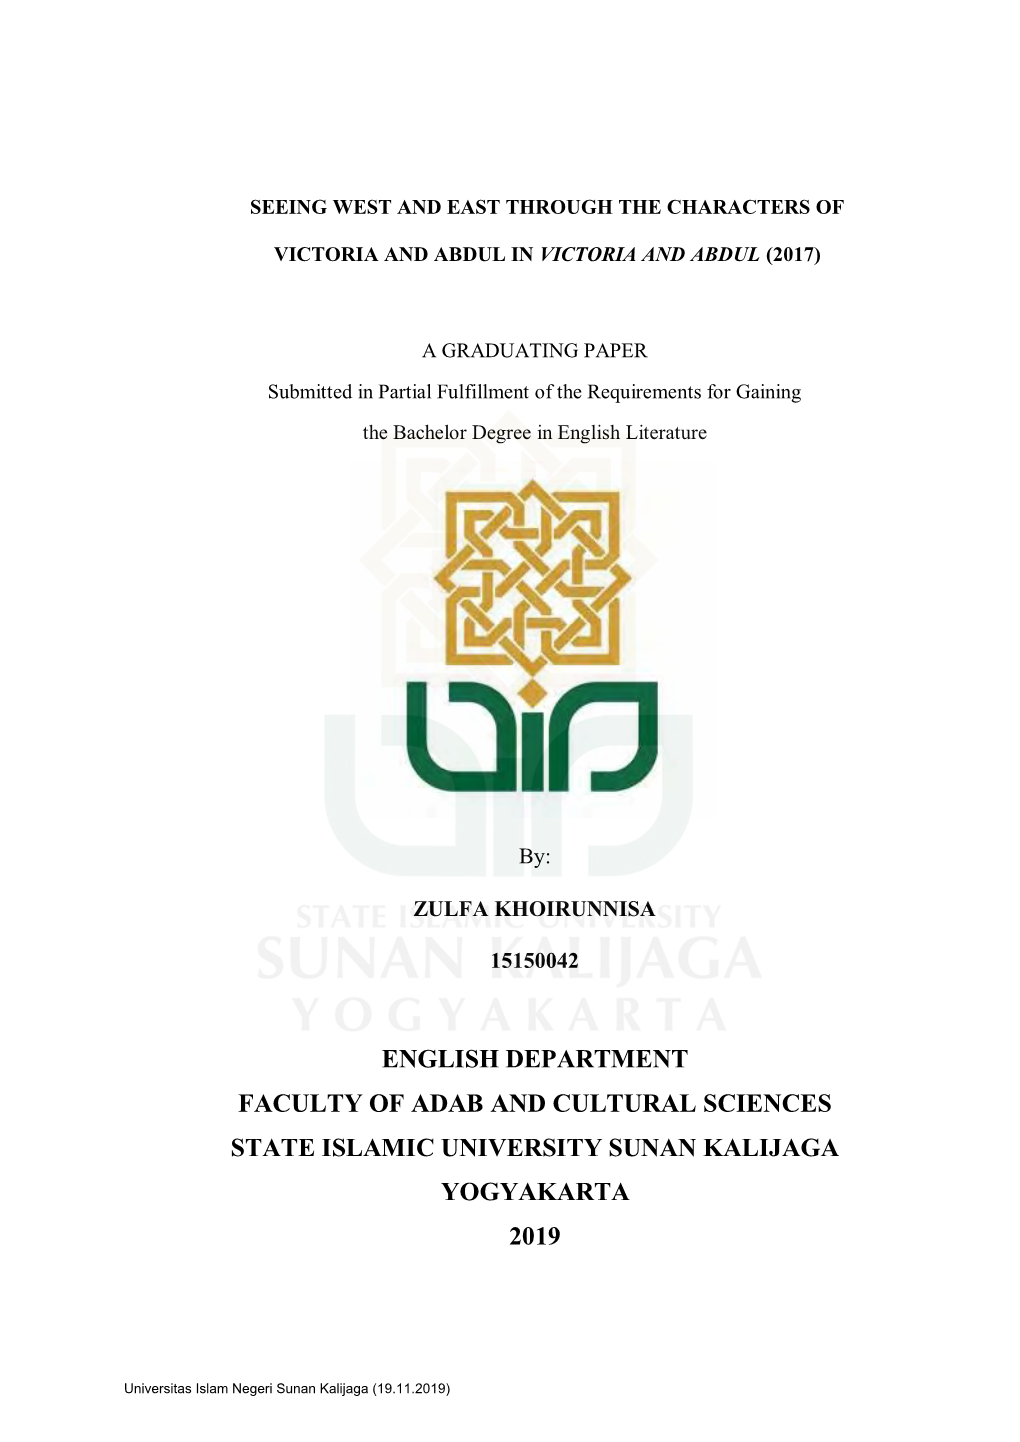 English Department Faculty of Adab and Cultural Sciences State Islamic University Sunan Kalijaga Yogyakarta 2019